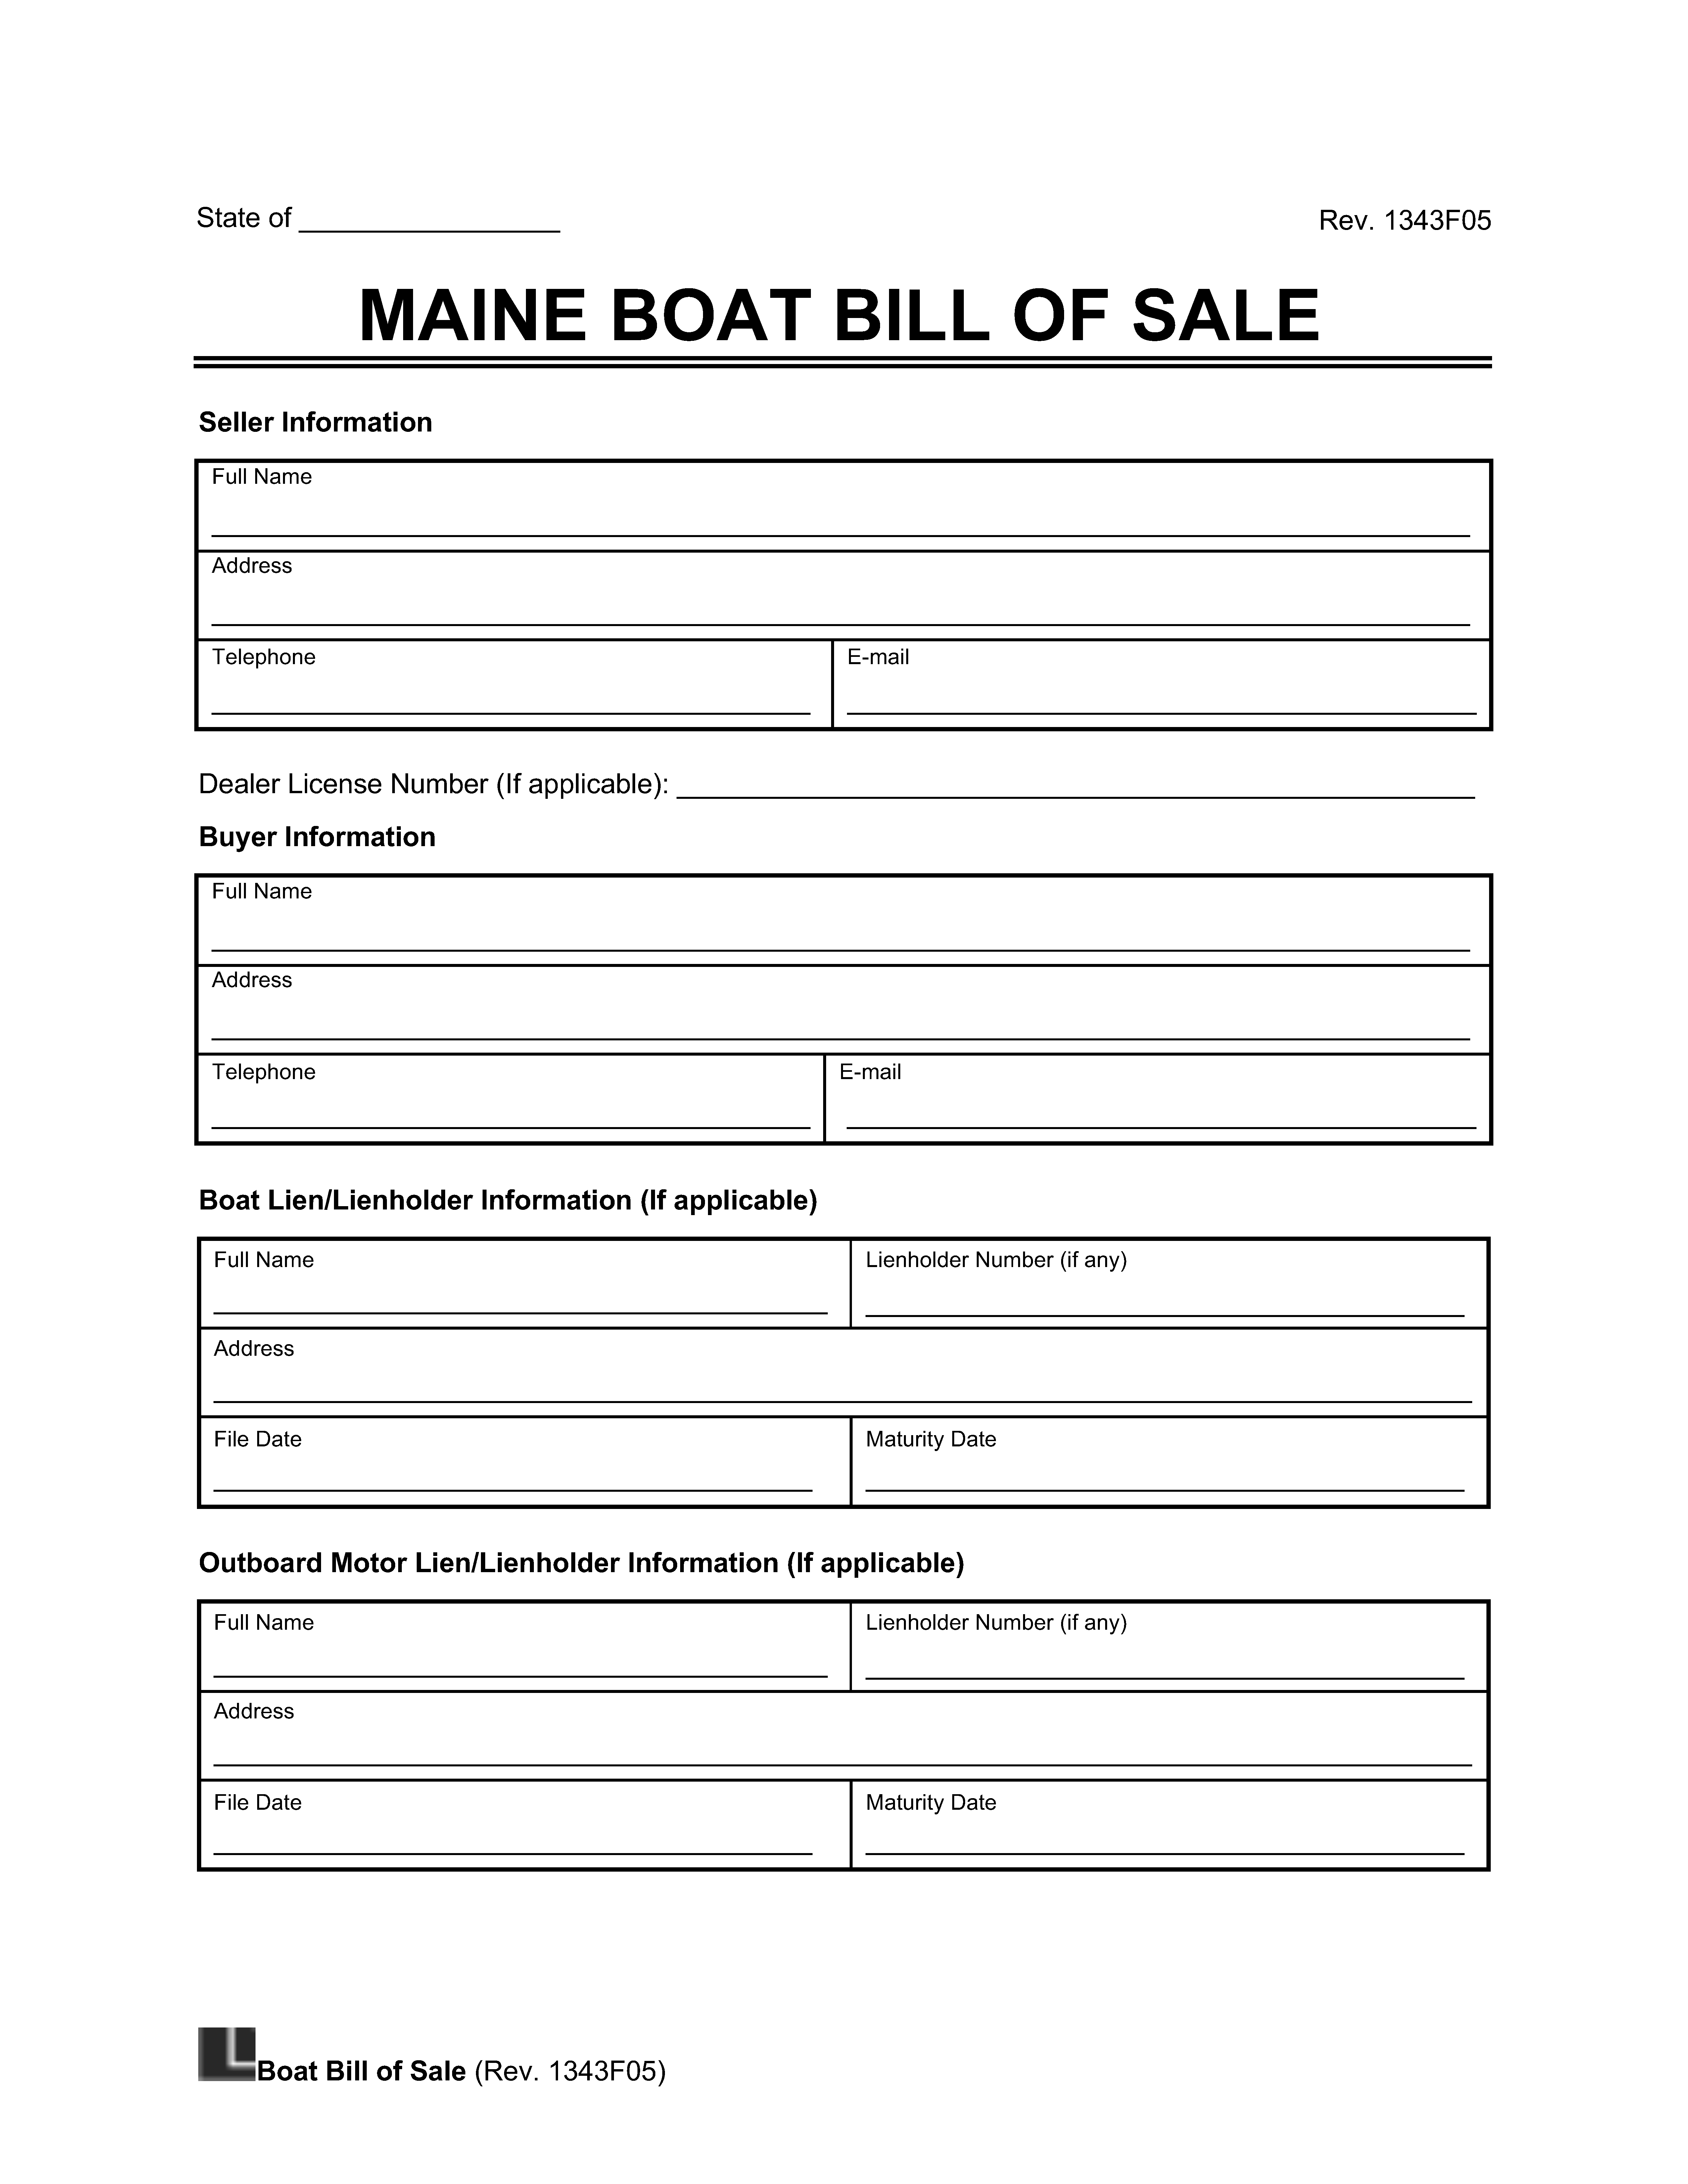 Maine Boat Bill of Sale screenshot